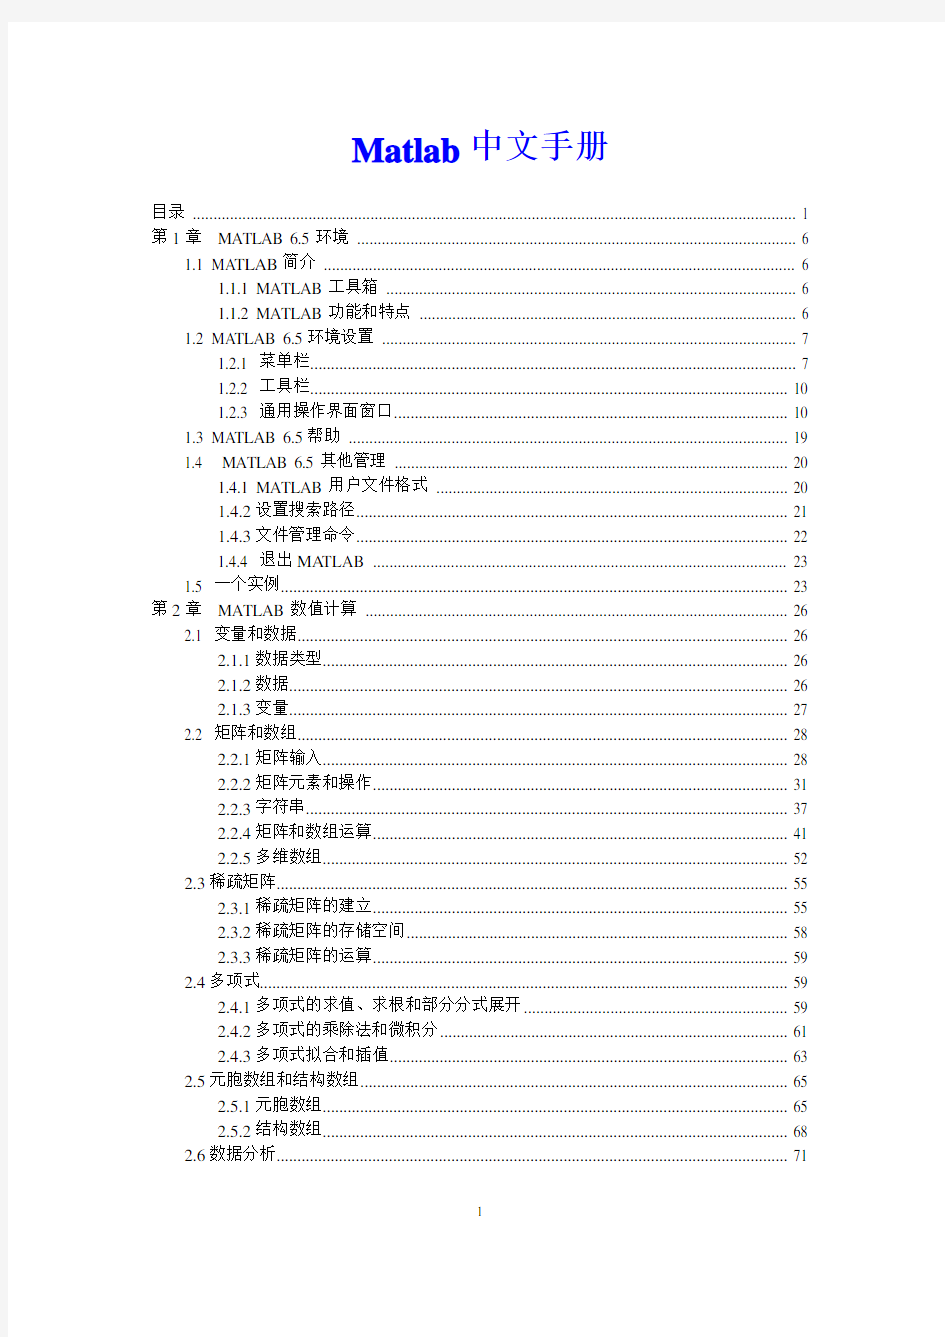 MATLAB中文手册